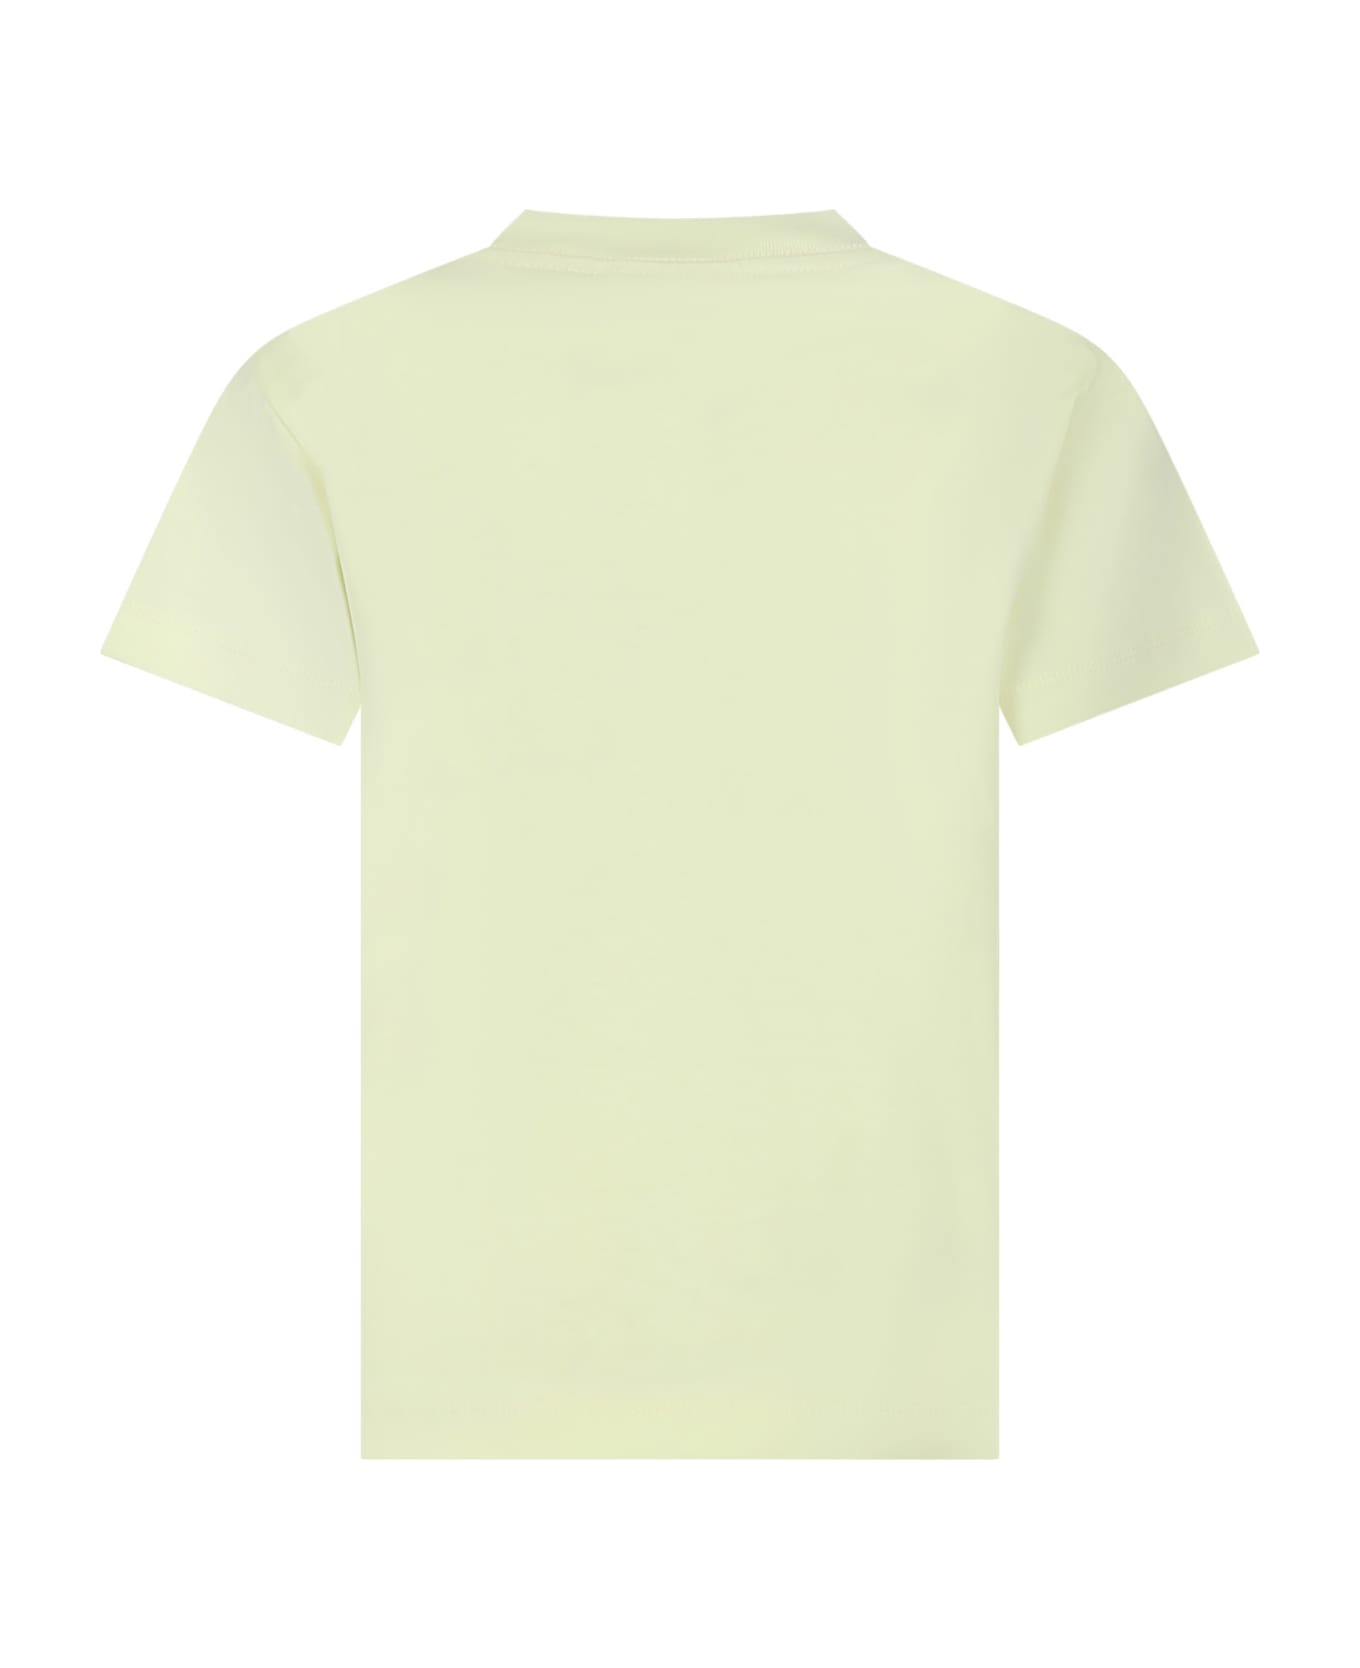 Molo Green T-shirt For Boy - Green